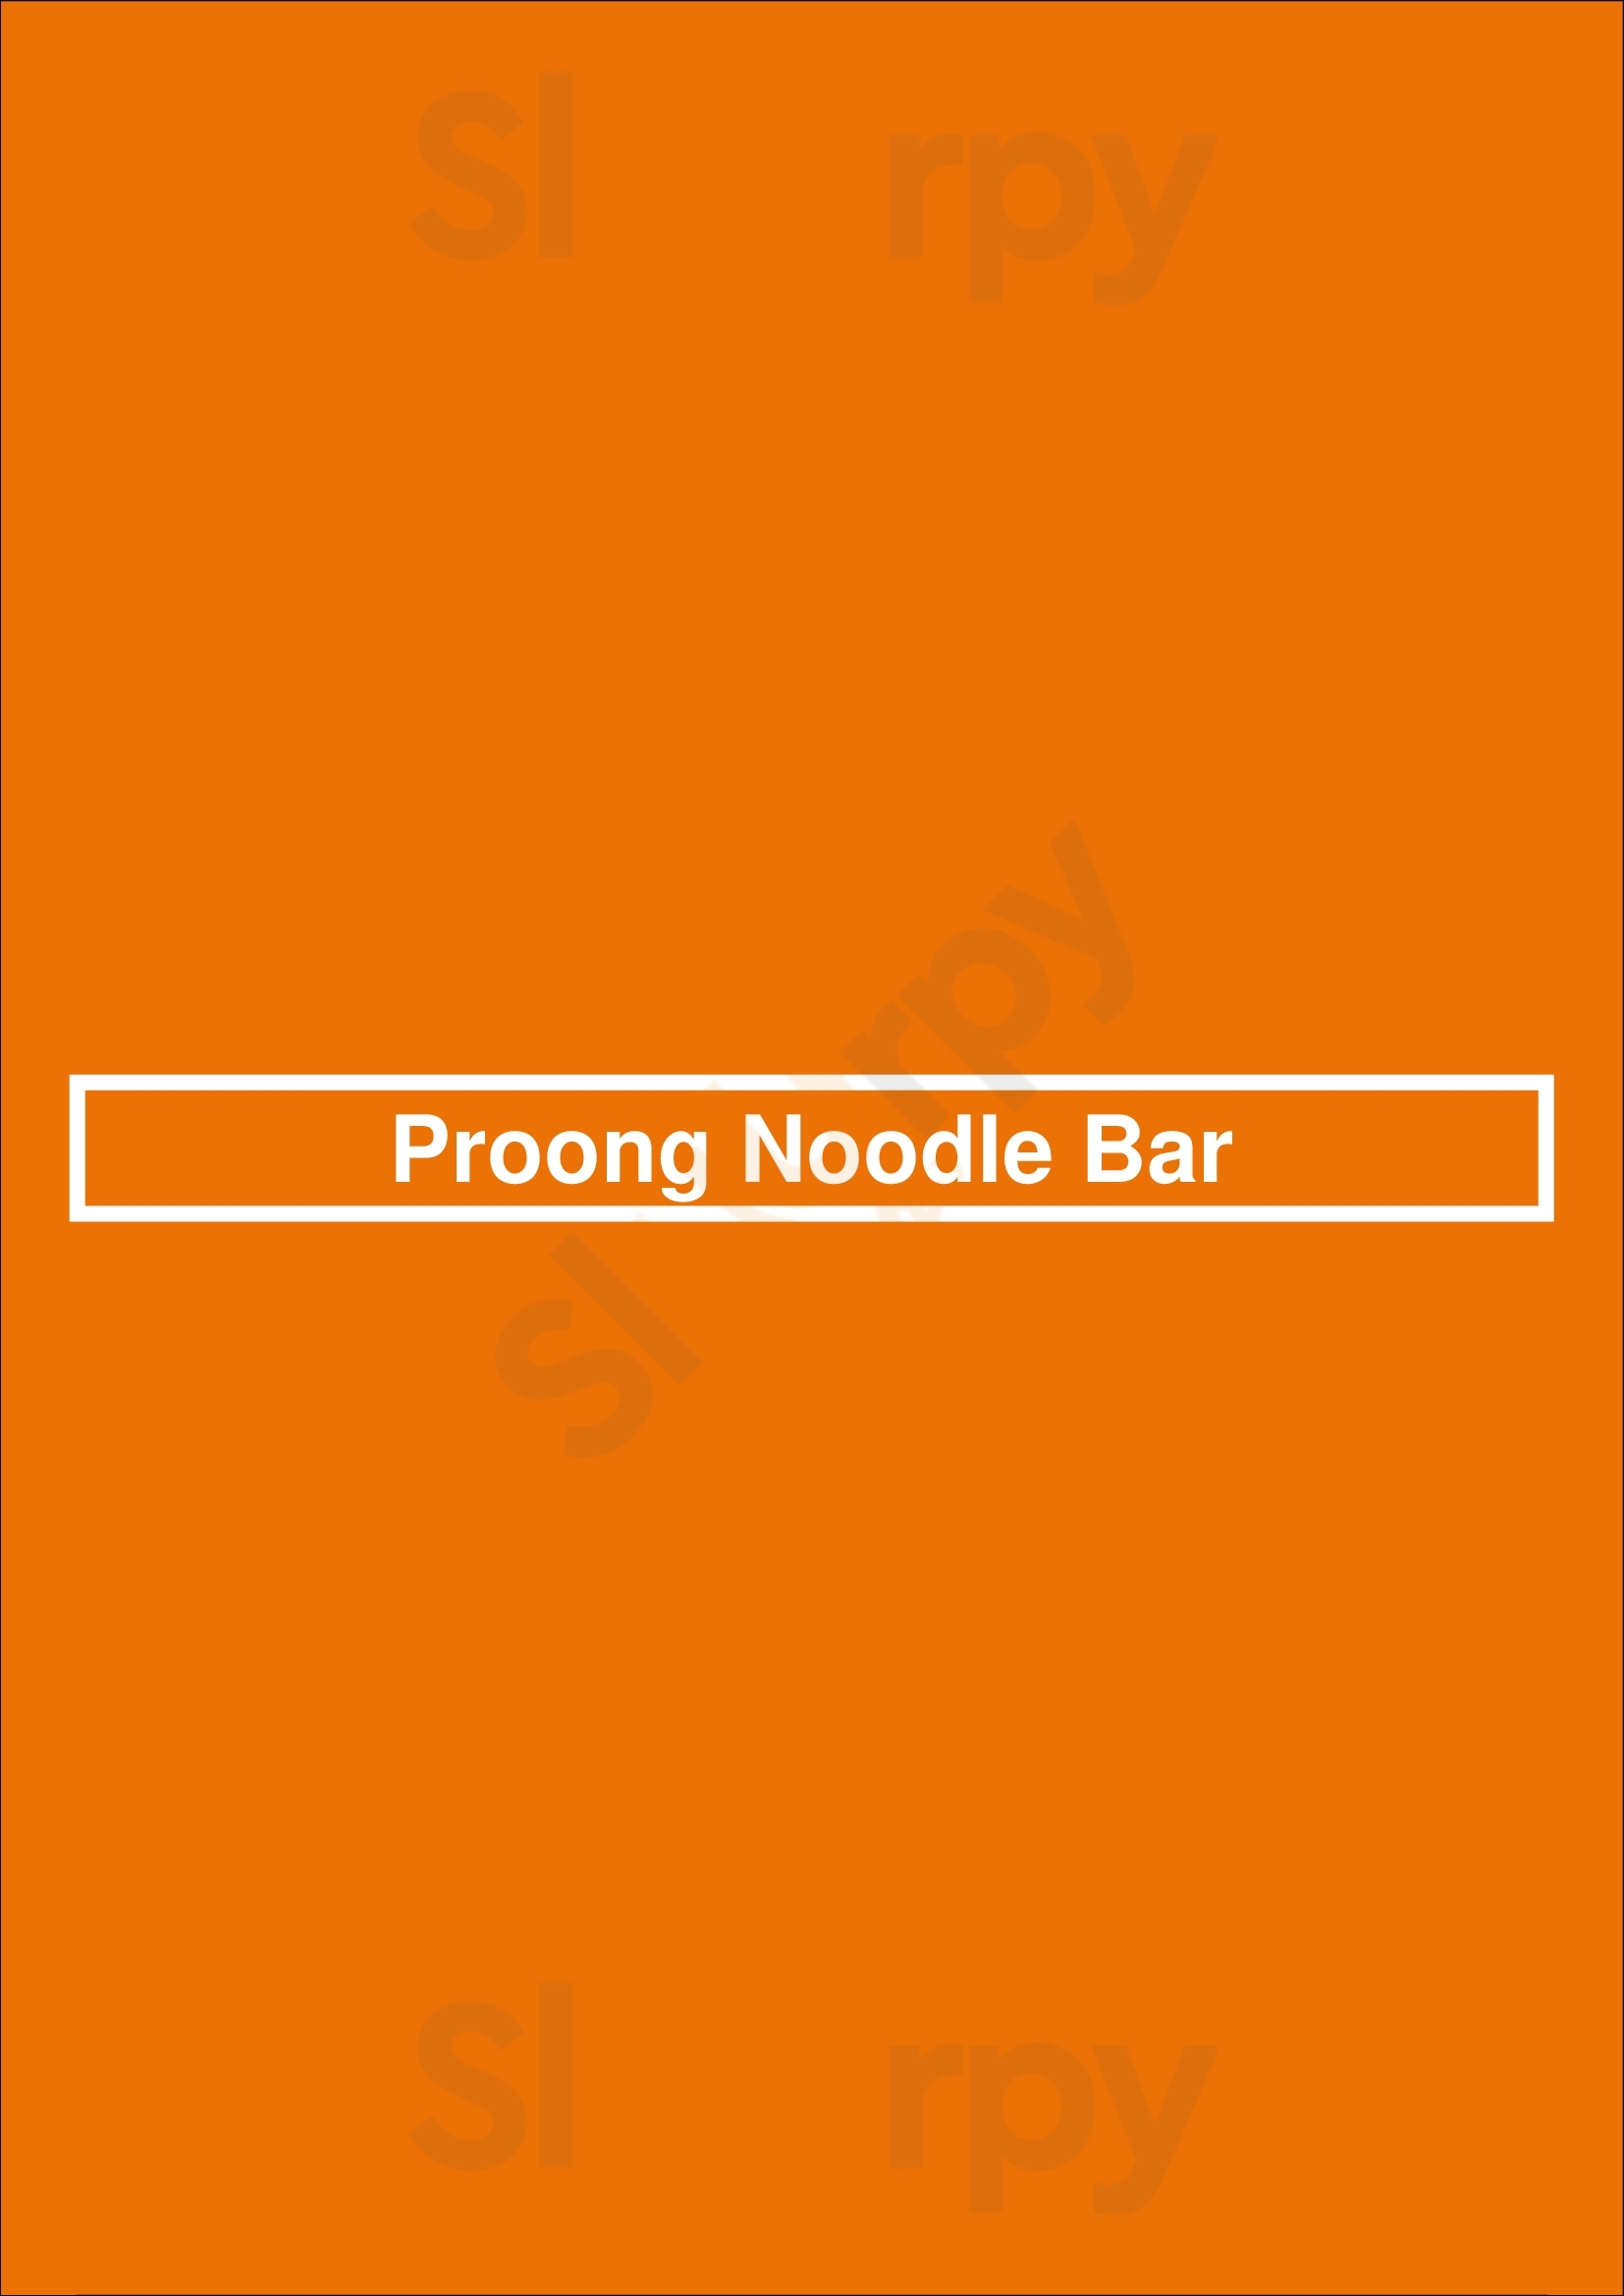 Proong Noodle Bar New York City Menu - 1